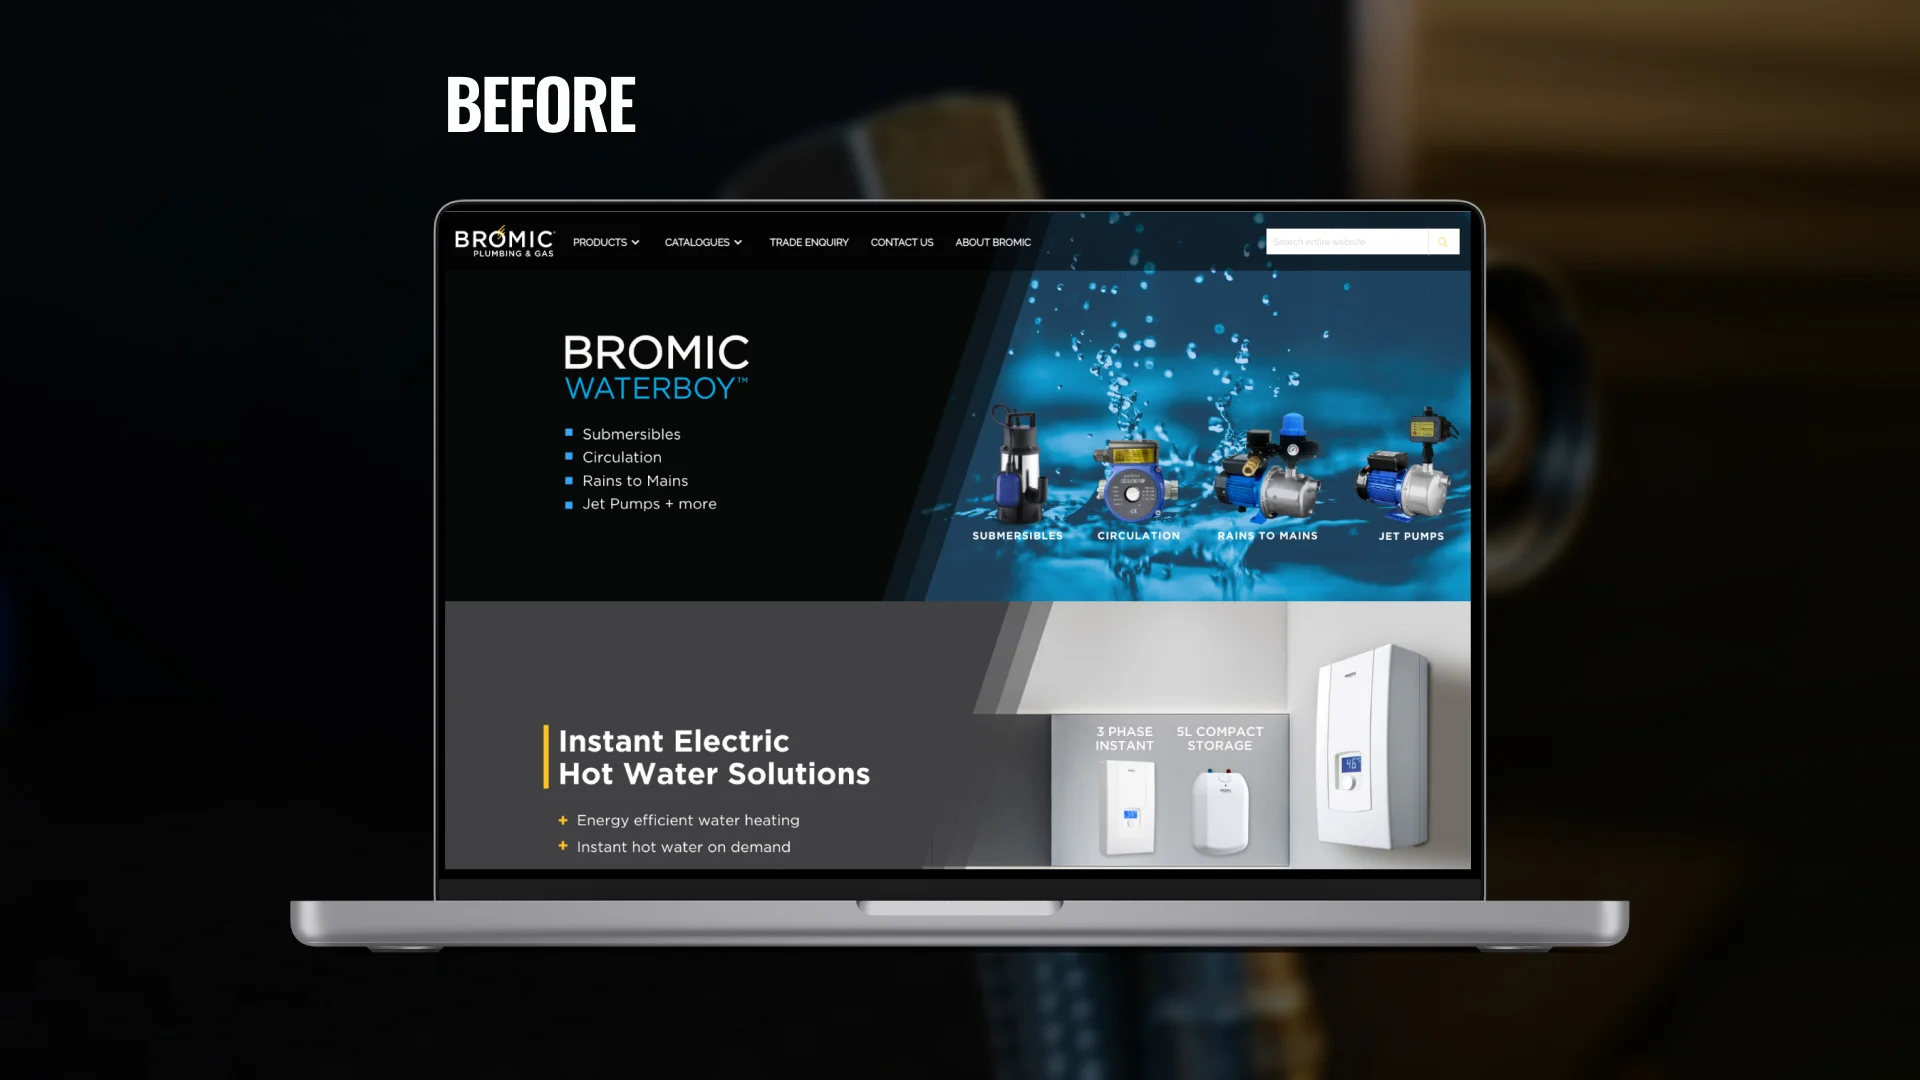 Comparison of Bromic Website Before Revamp